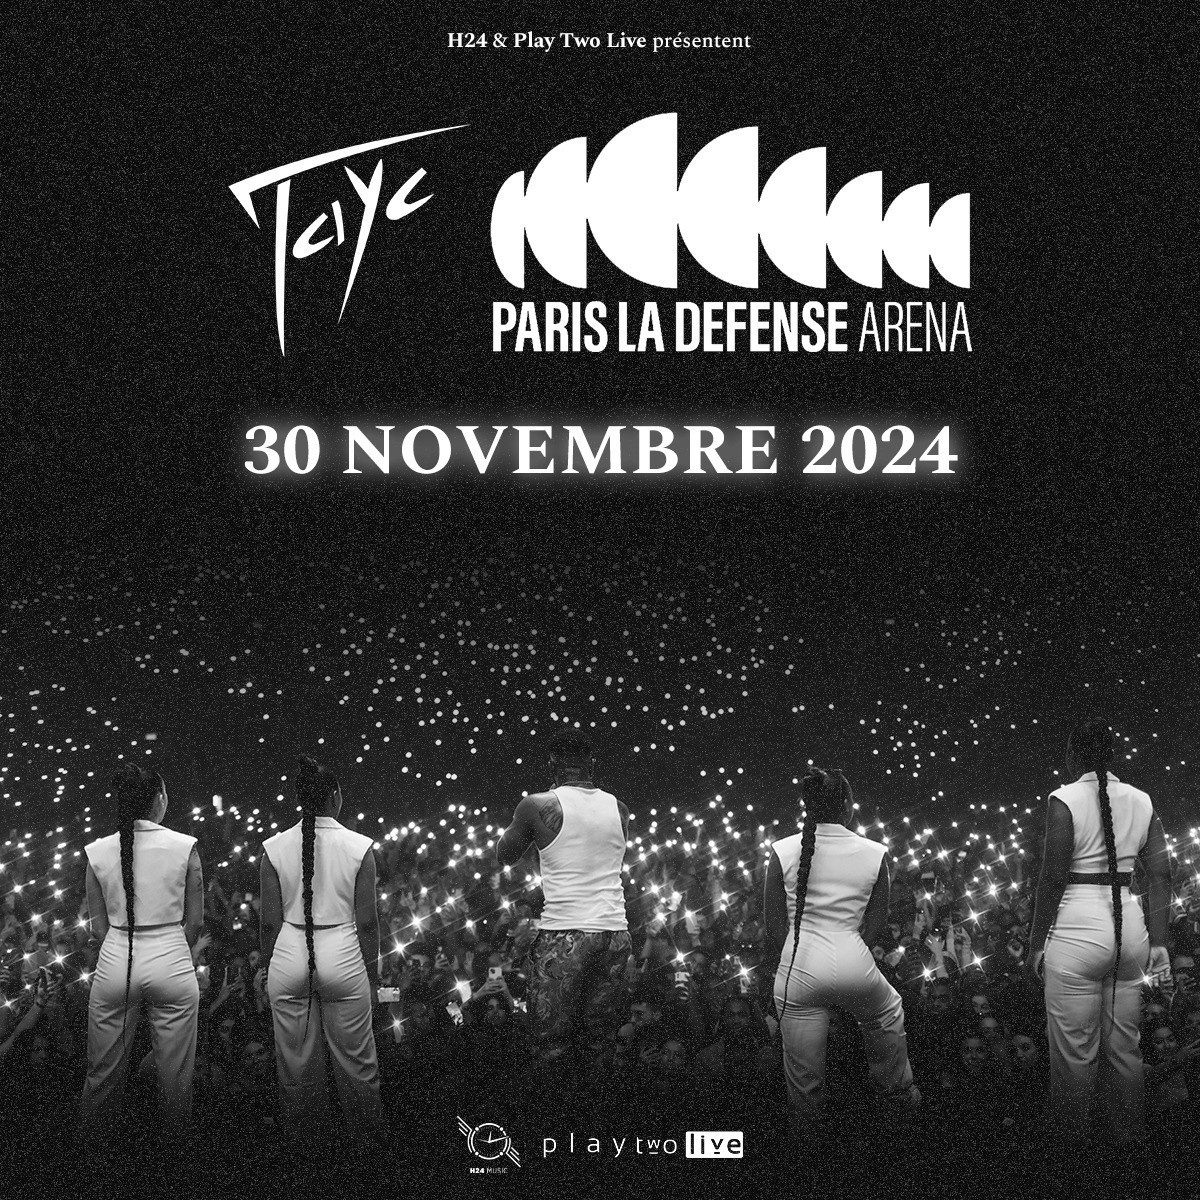 Tayc în concert la Paris La Défense Arena în noiembrie 2024